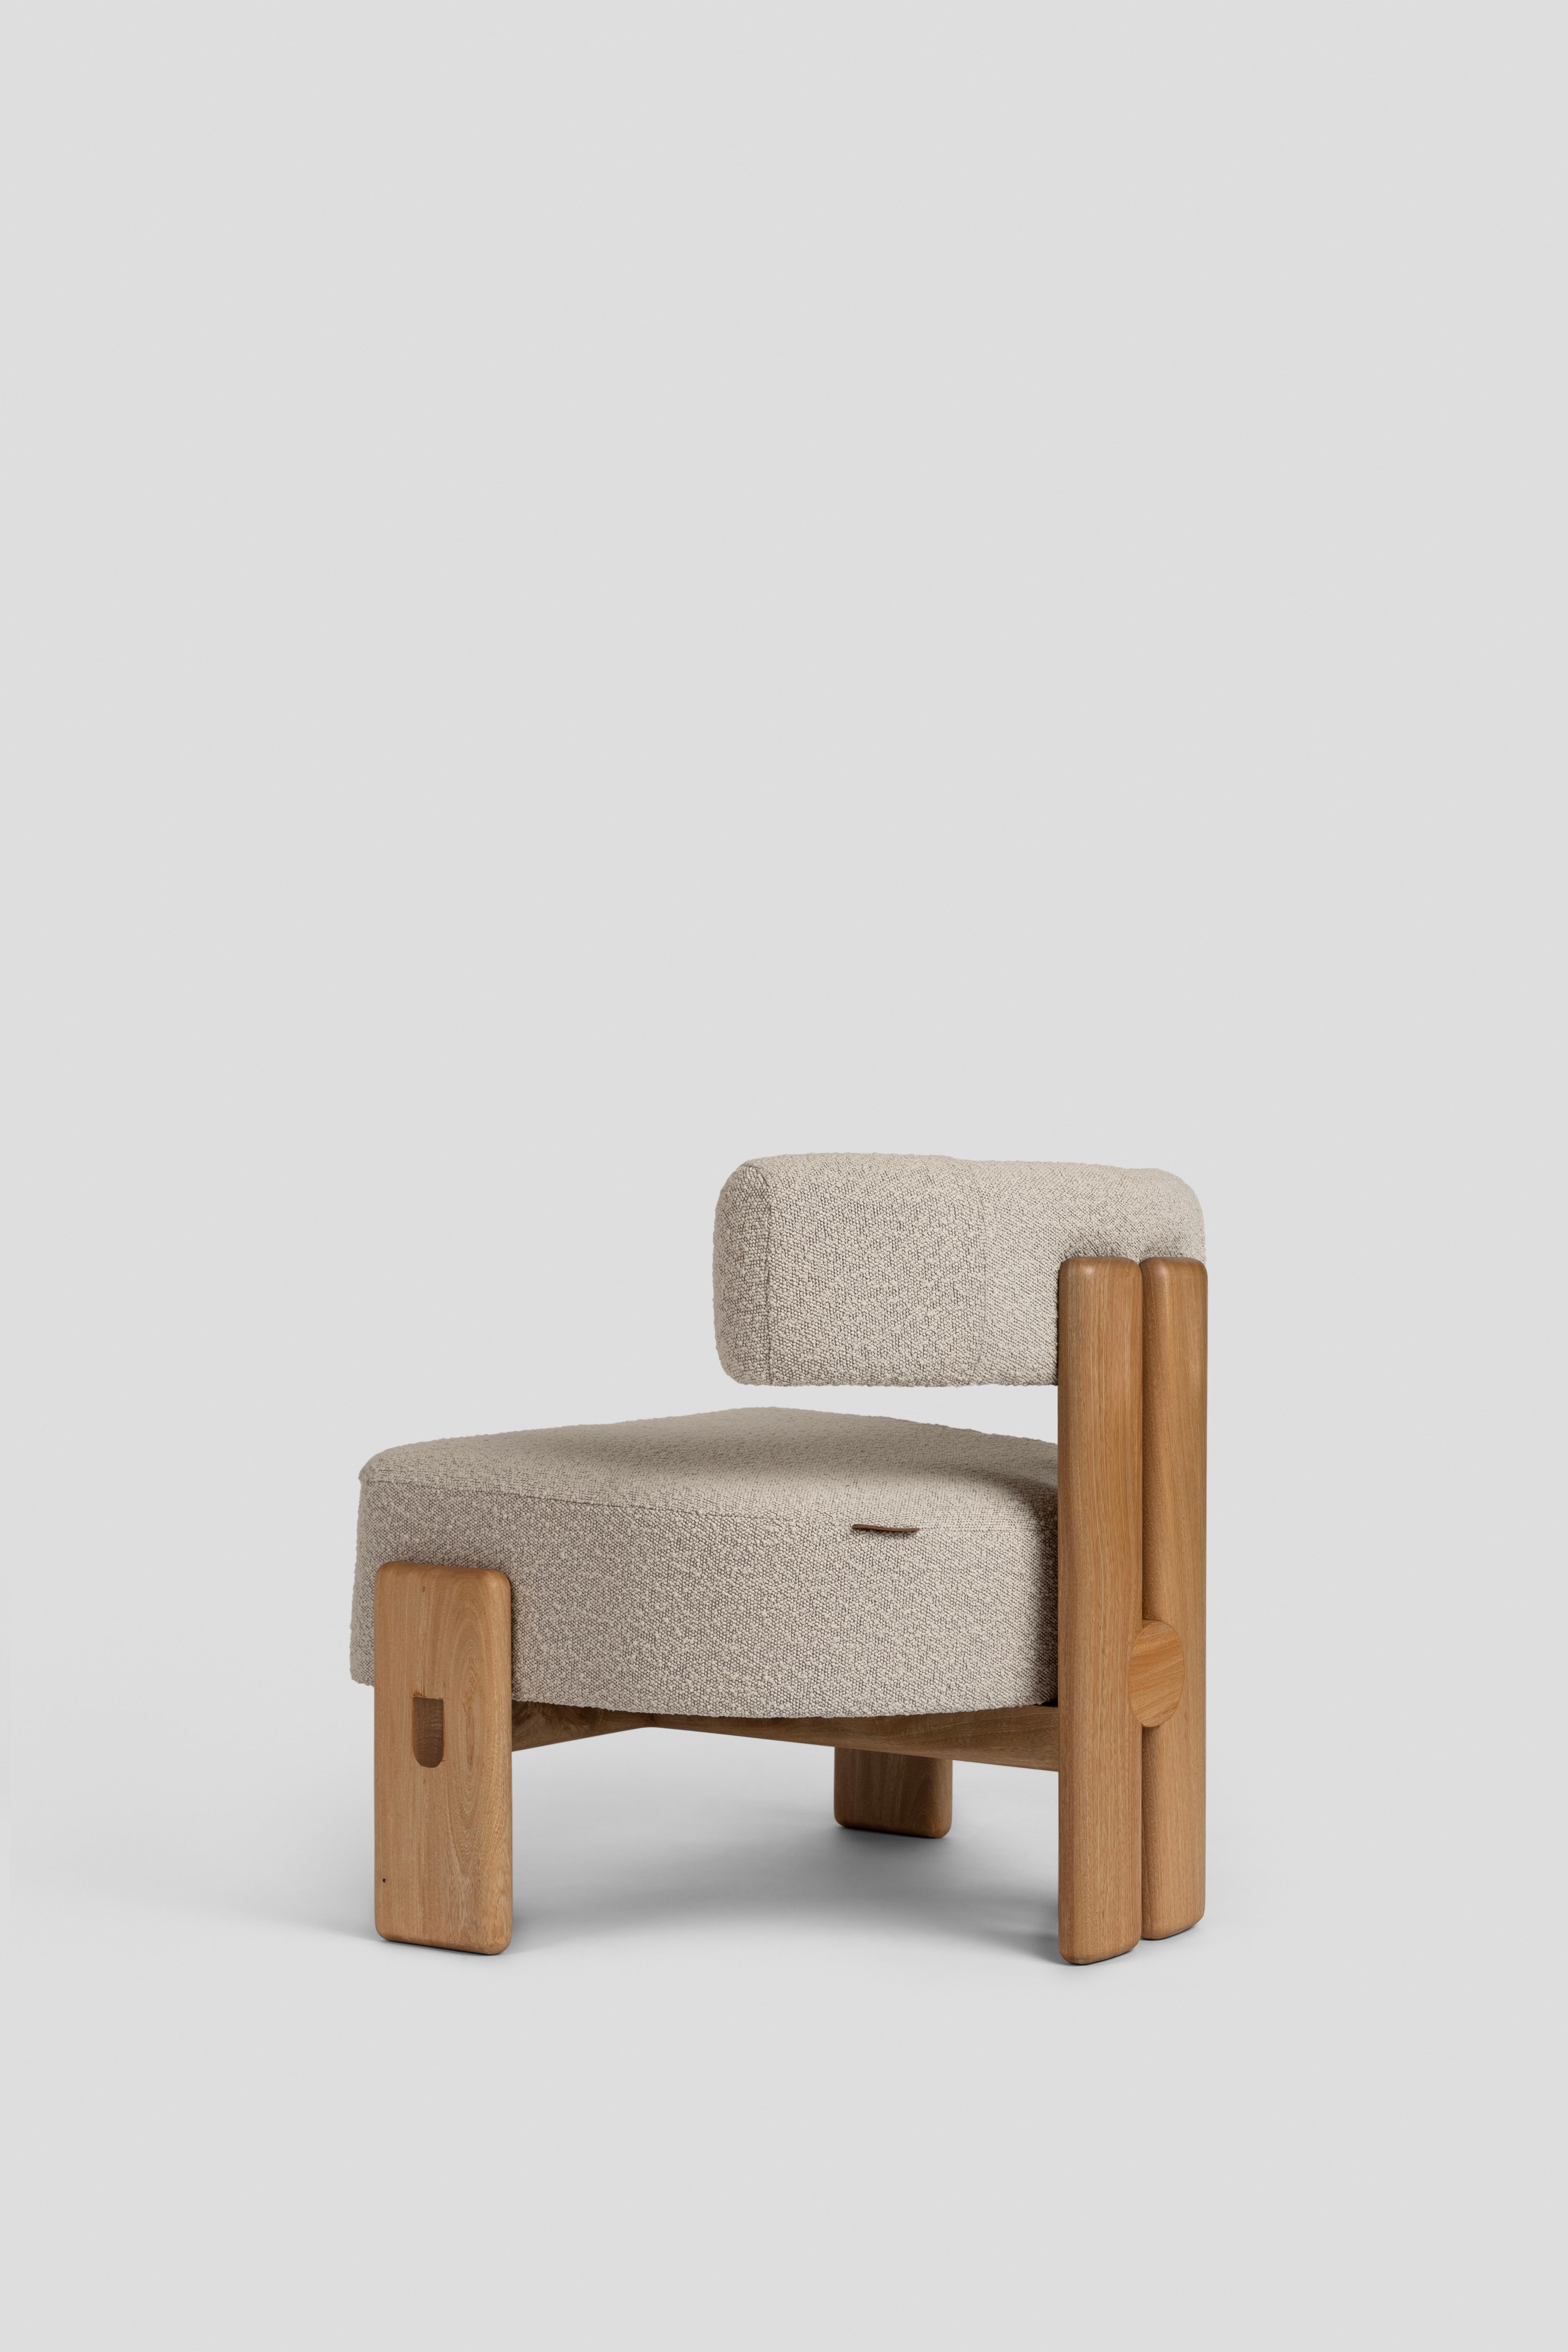 Caning De la Paz Low Chair Solid Wood COM, Contemporary Mexican Design